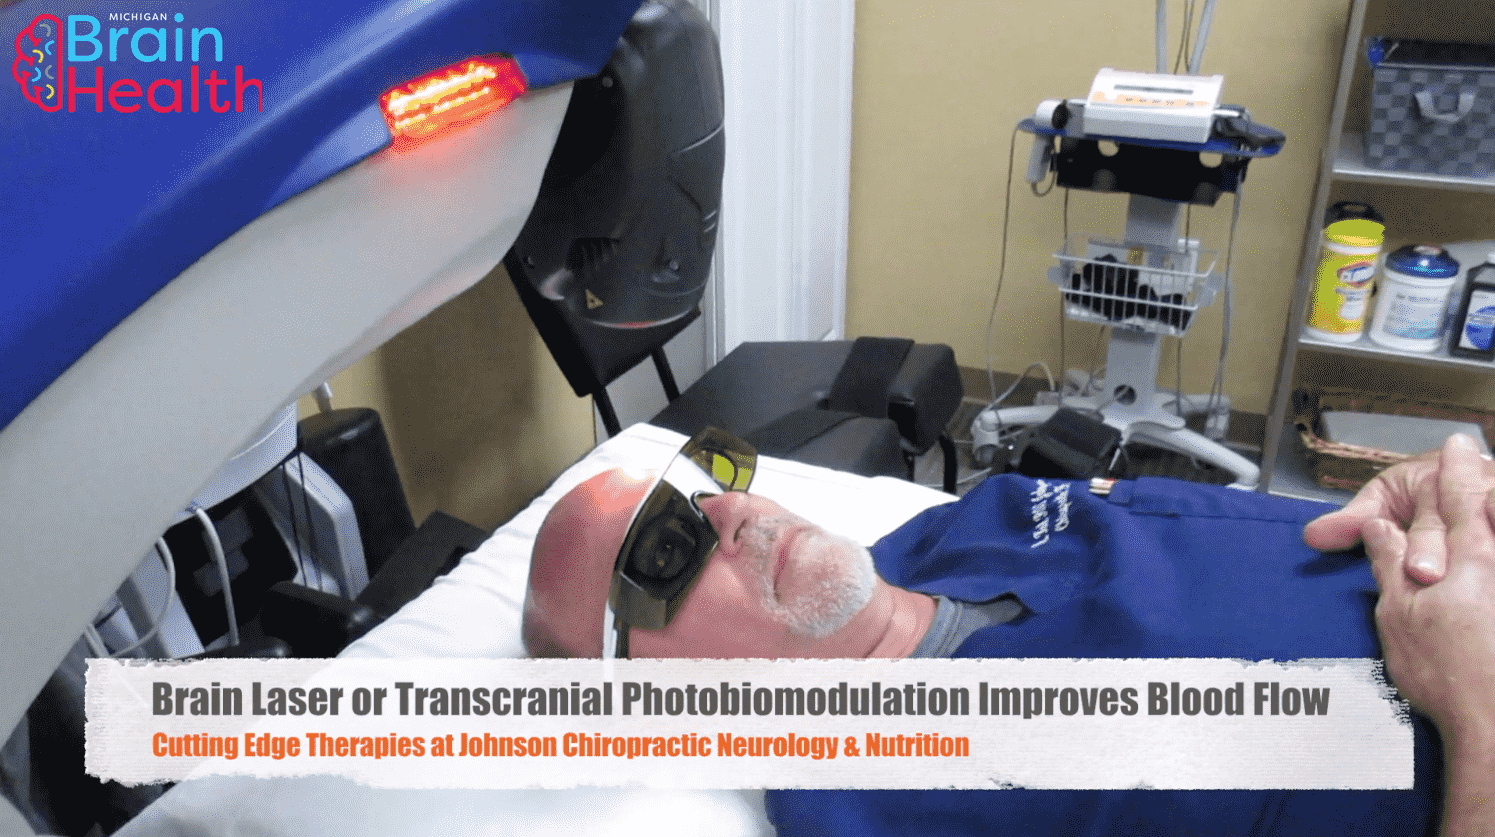 Dr. Johnson receives Transcranial PBM